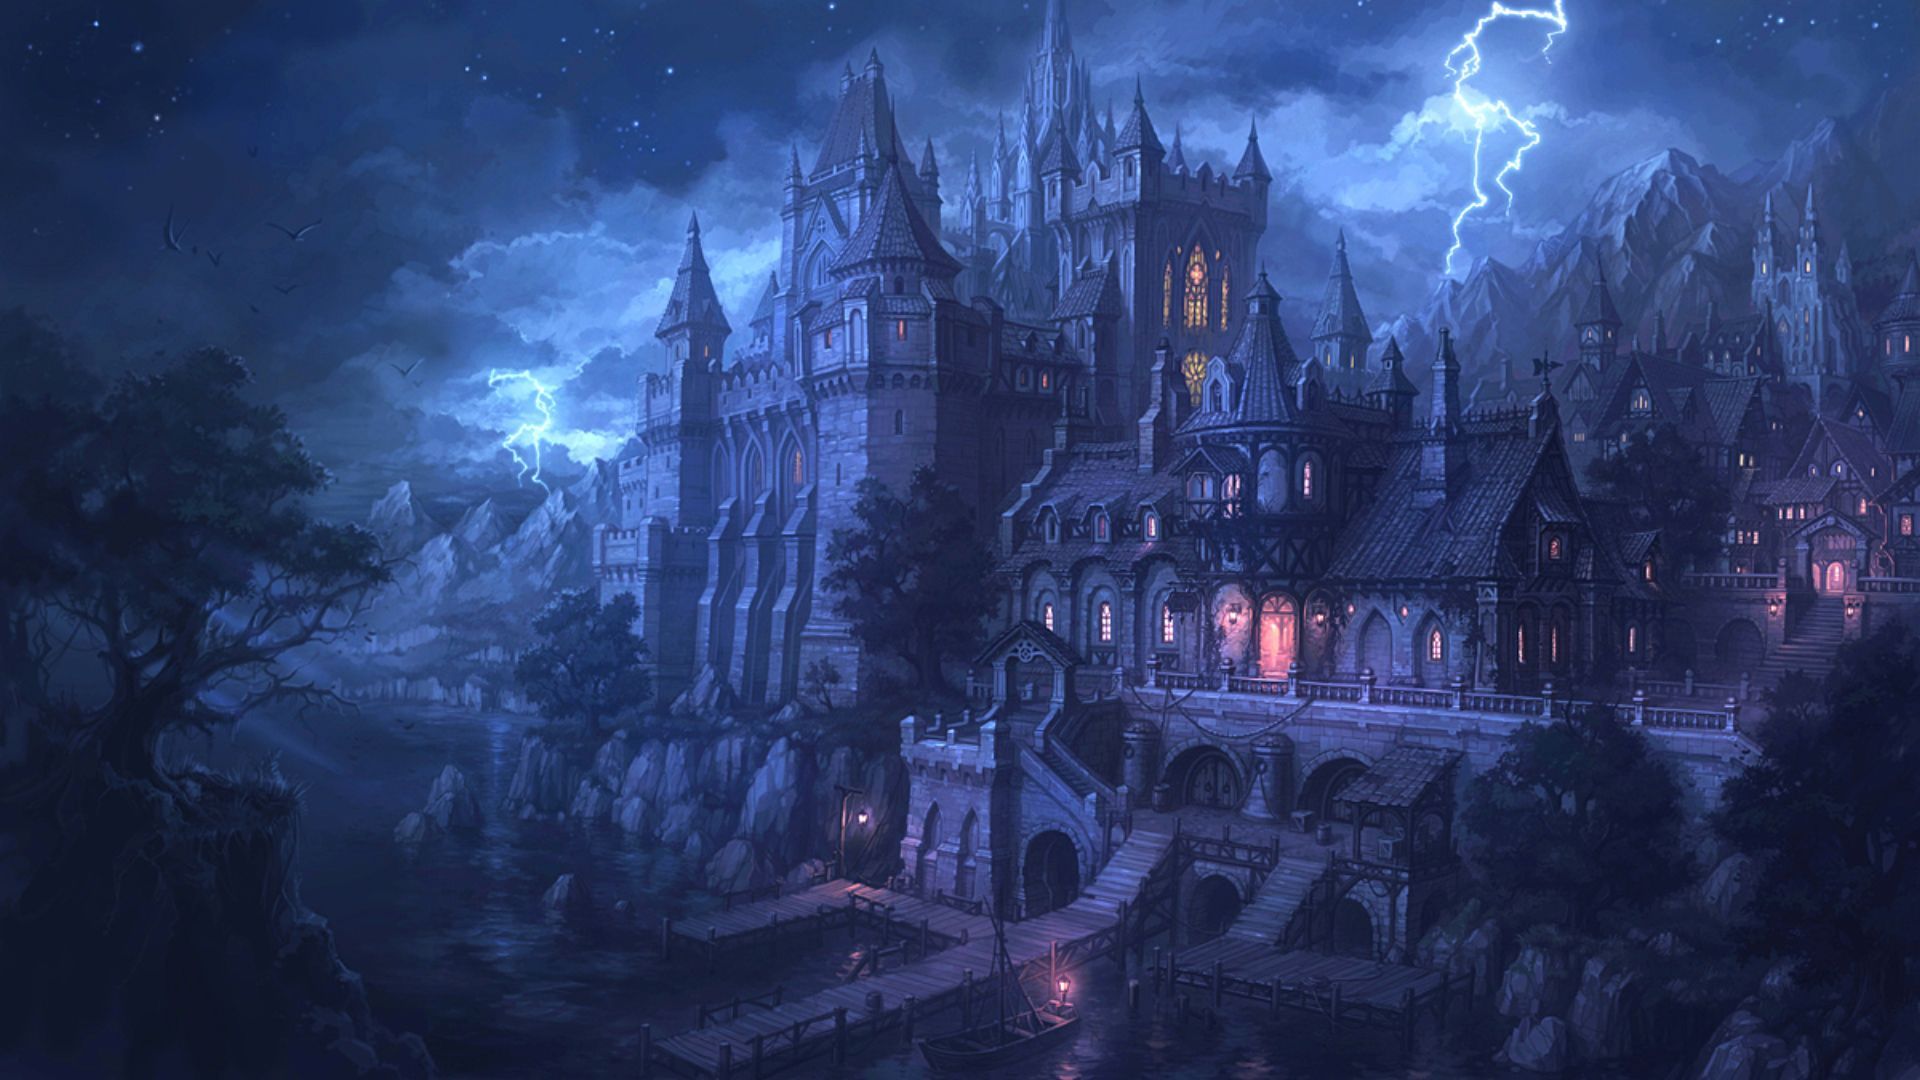 Night Castle wallpaper. Fantasy castle, Castle art, Fantasy landscape